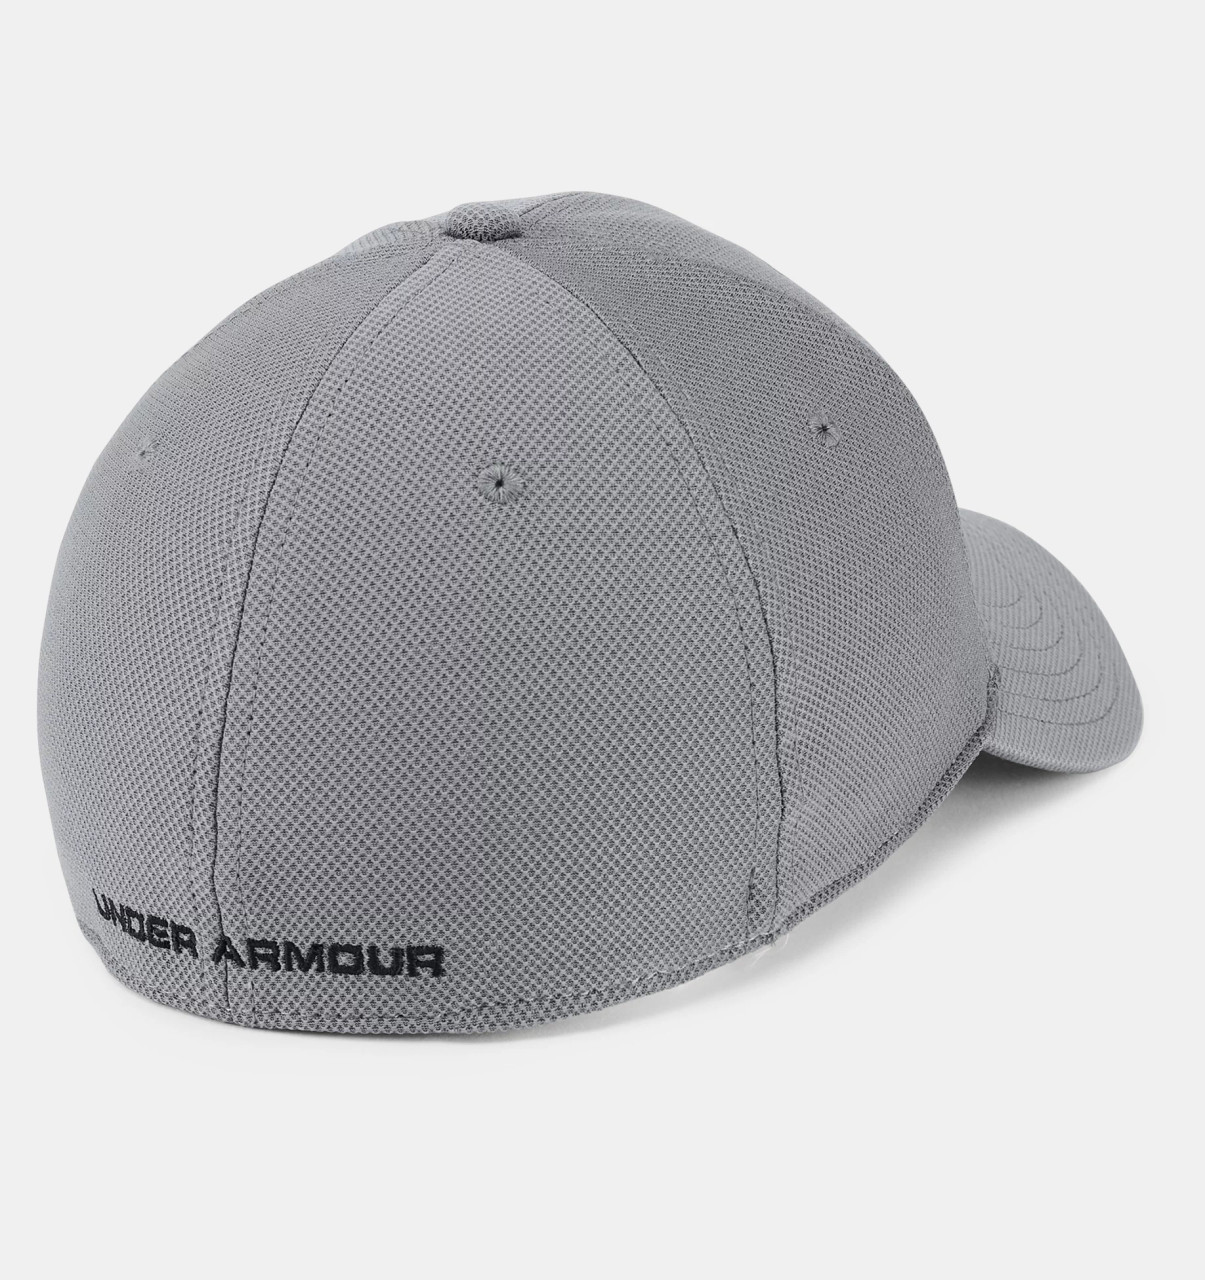 Under Armour Mens Cap Gray M/L Flash 1 Panel Baseball Hat 1305014